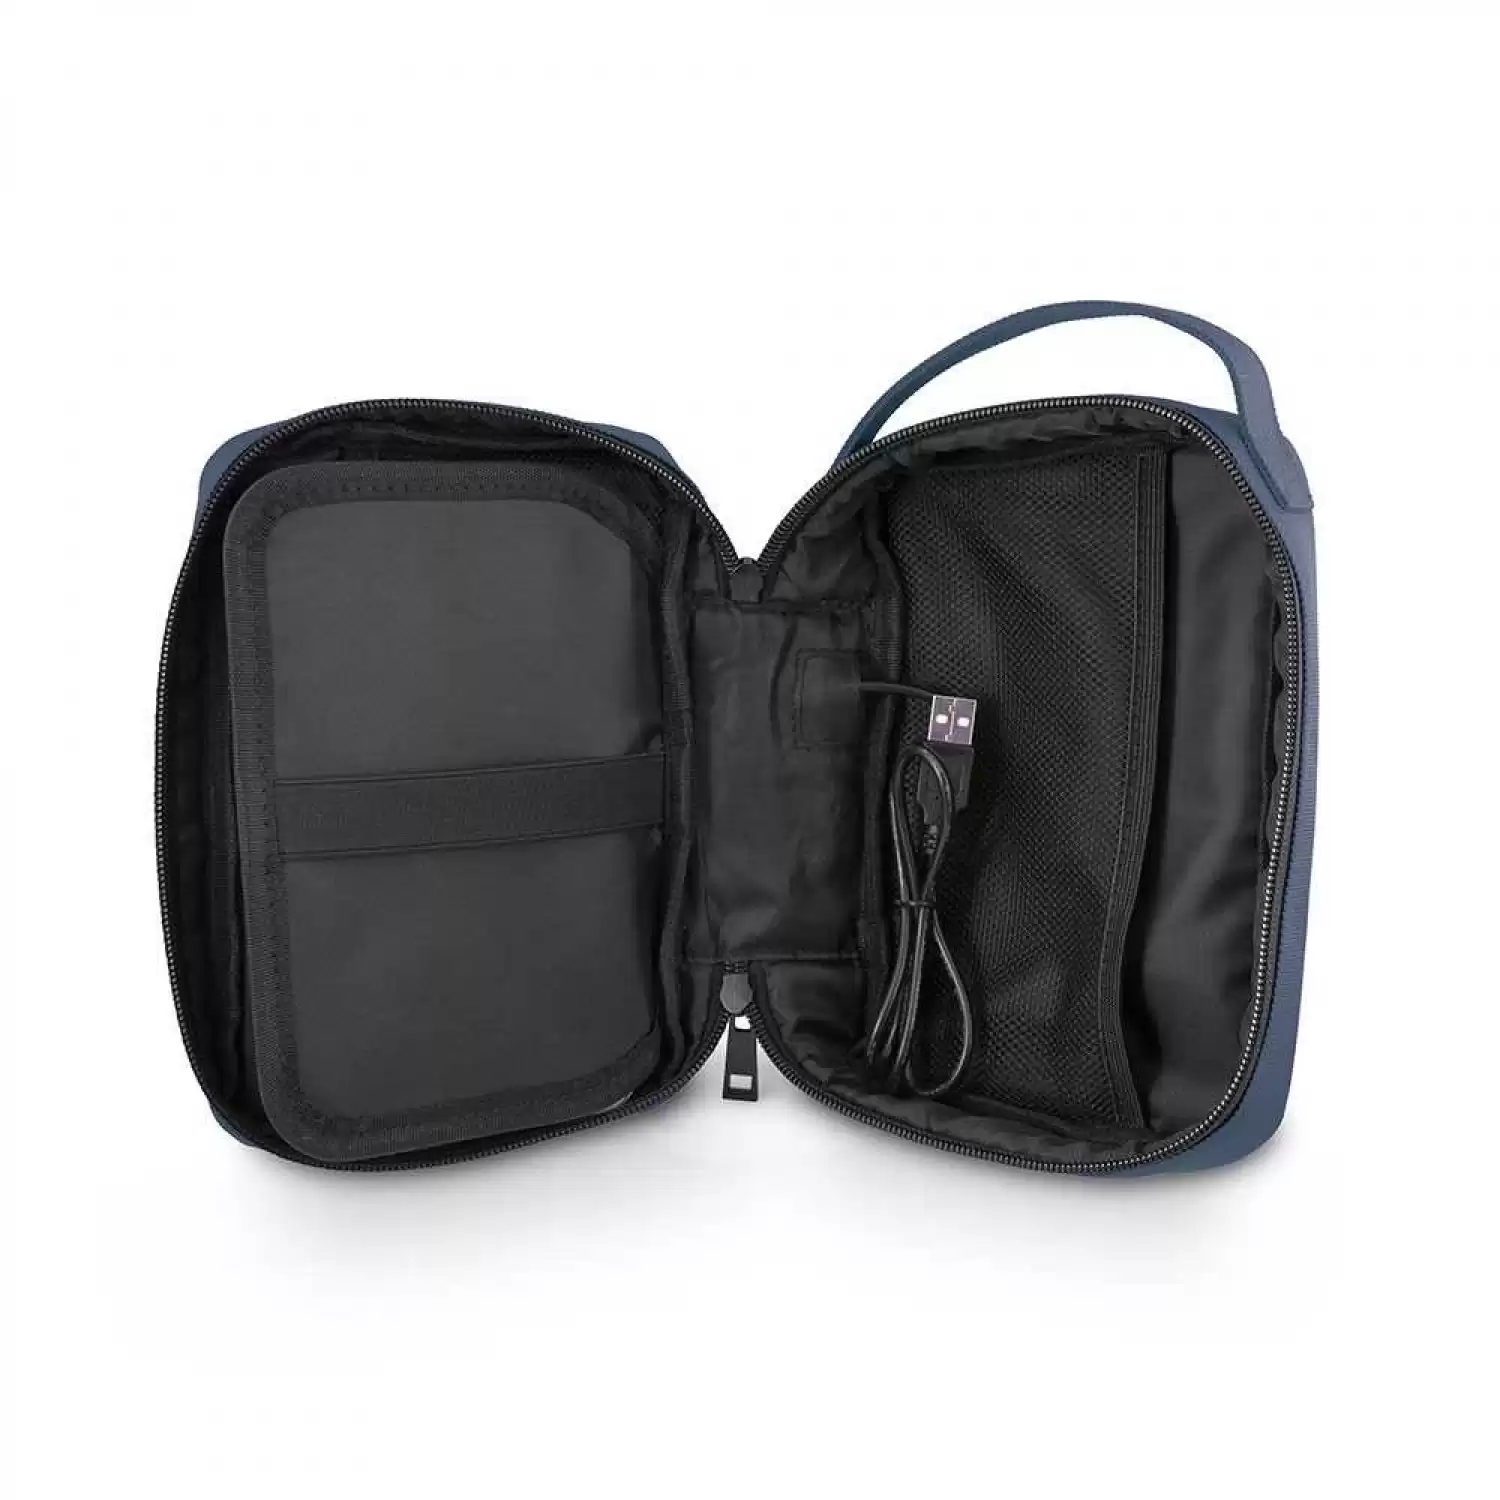 u-s-polo-assn-nylon-tablet-bag-for-electronic-accessories-navyushbnyemnv-16067-1-1500×1500